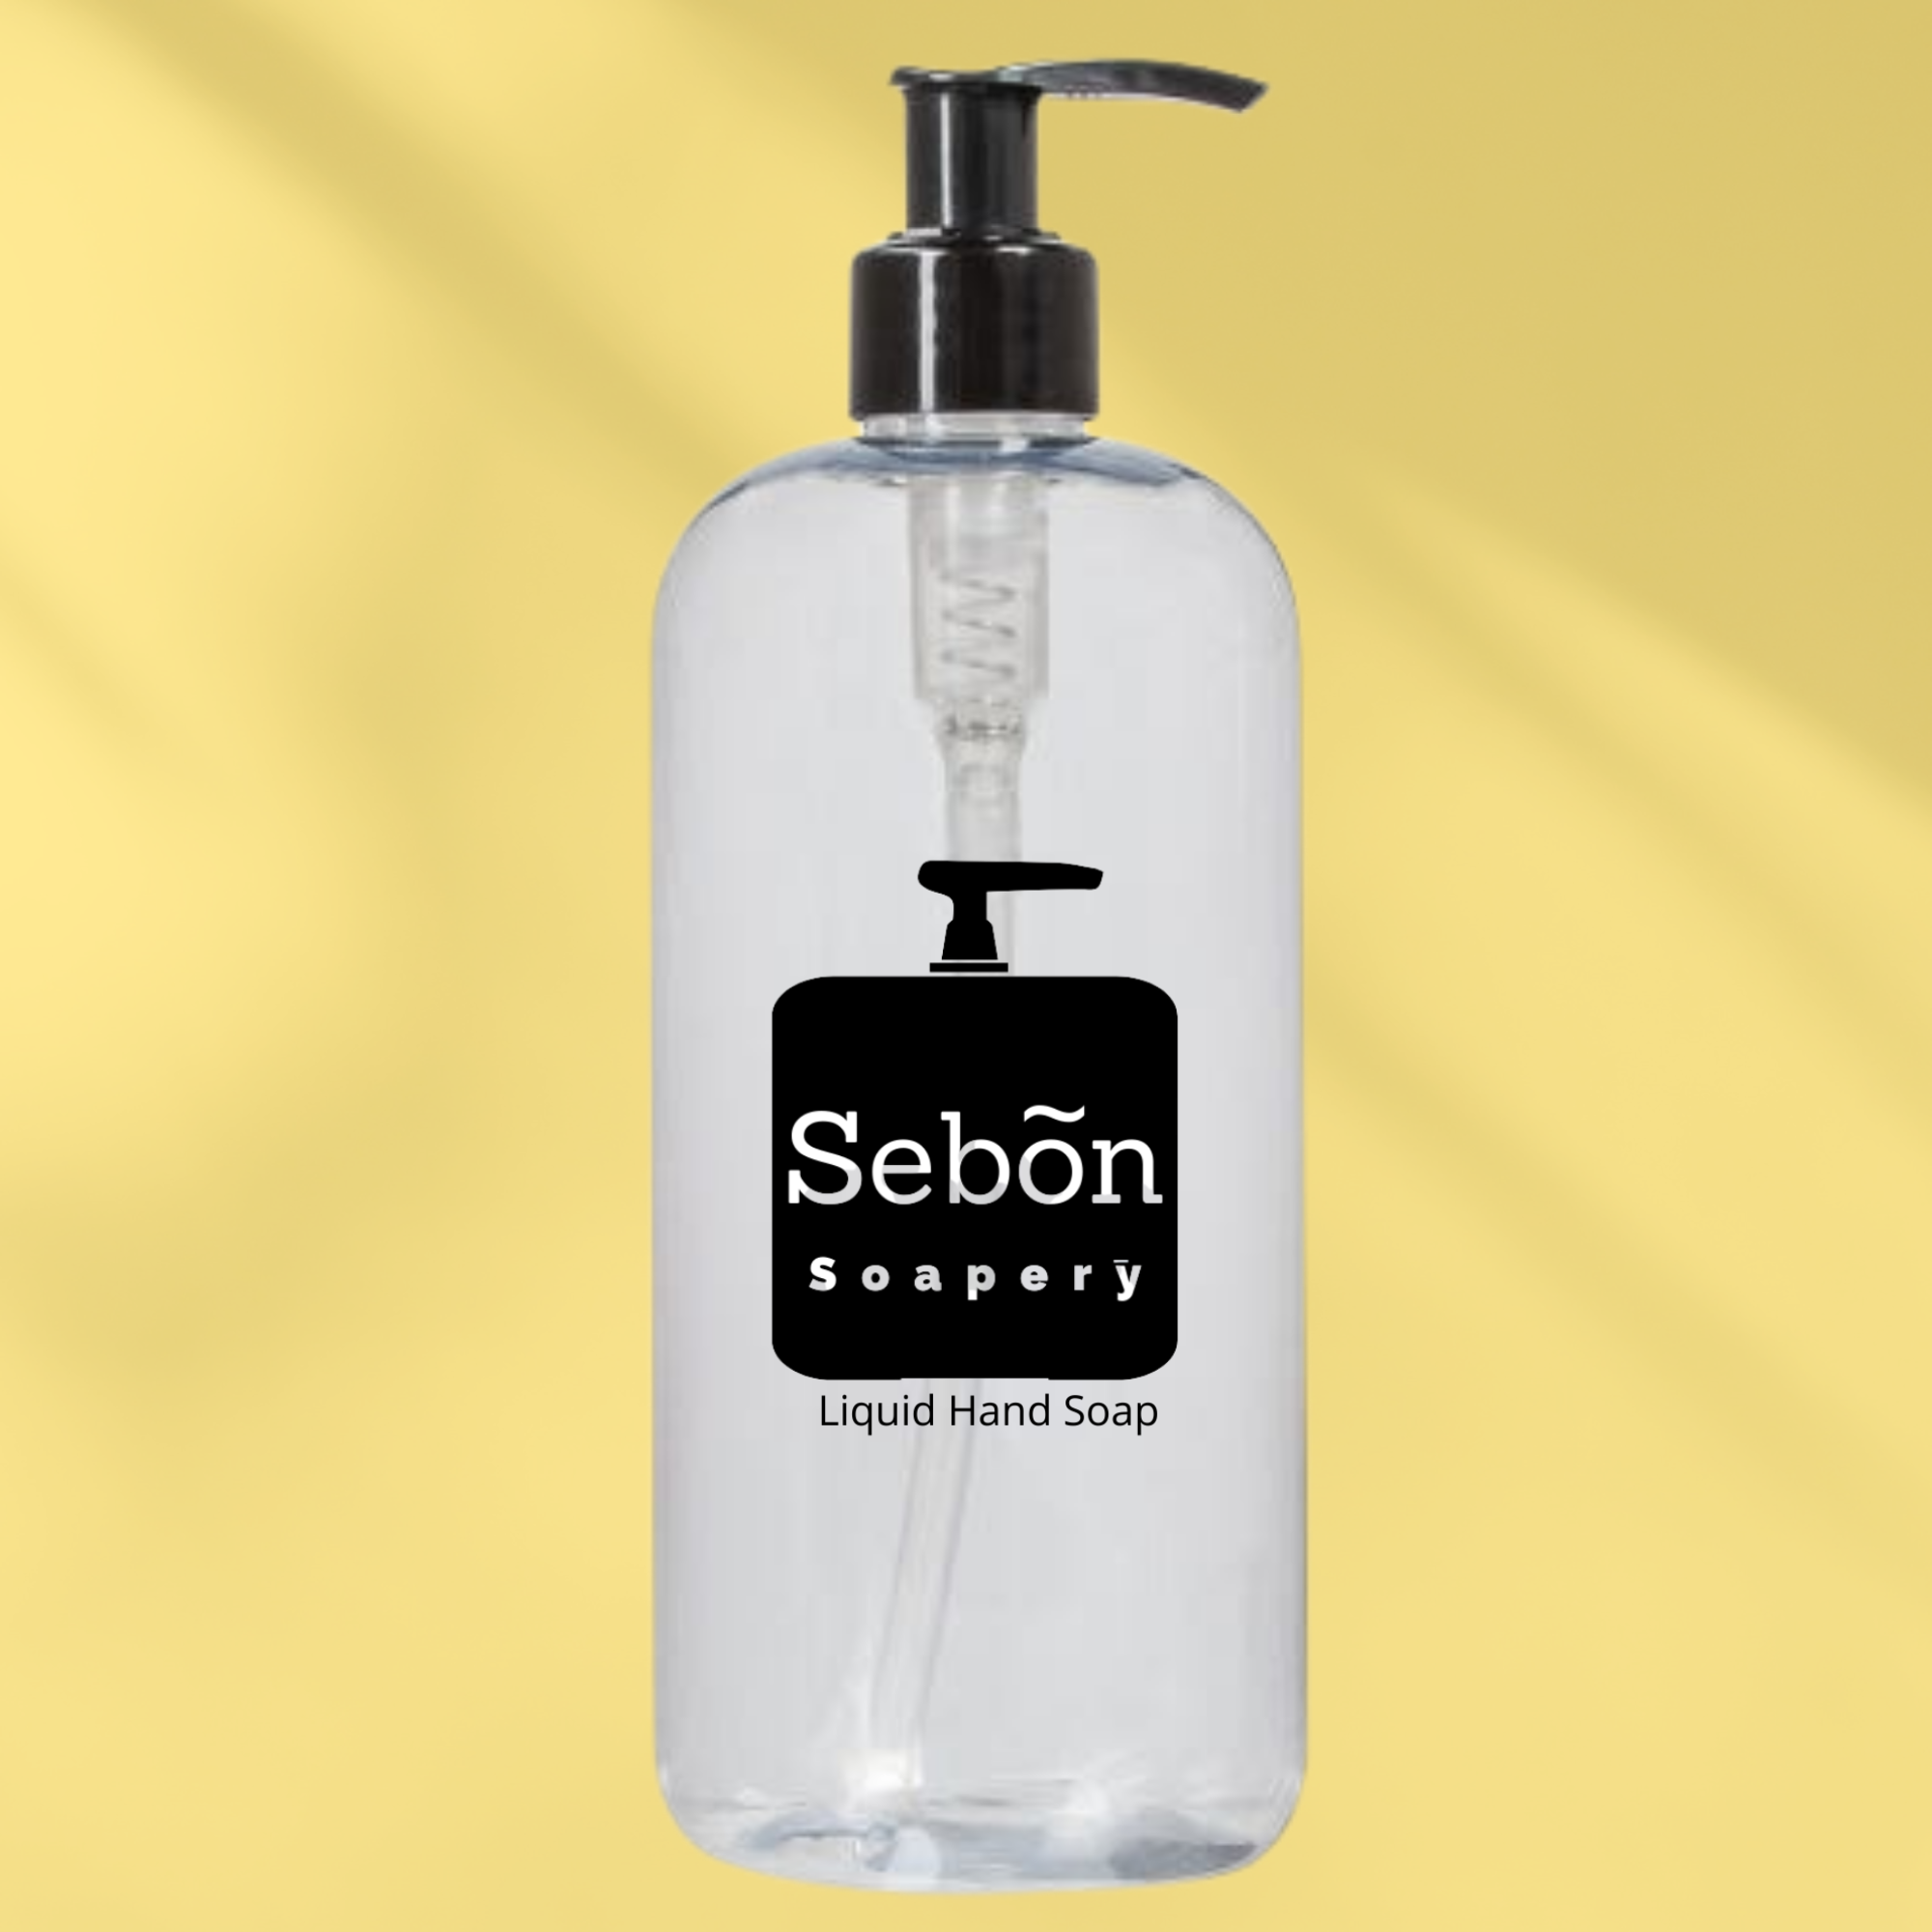 Sebon Vampires Breath Scented Liquid Hand Soap with Olive Oil